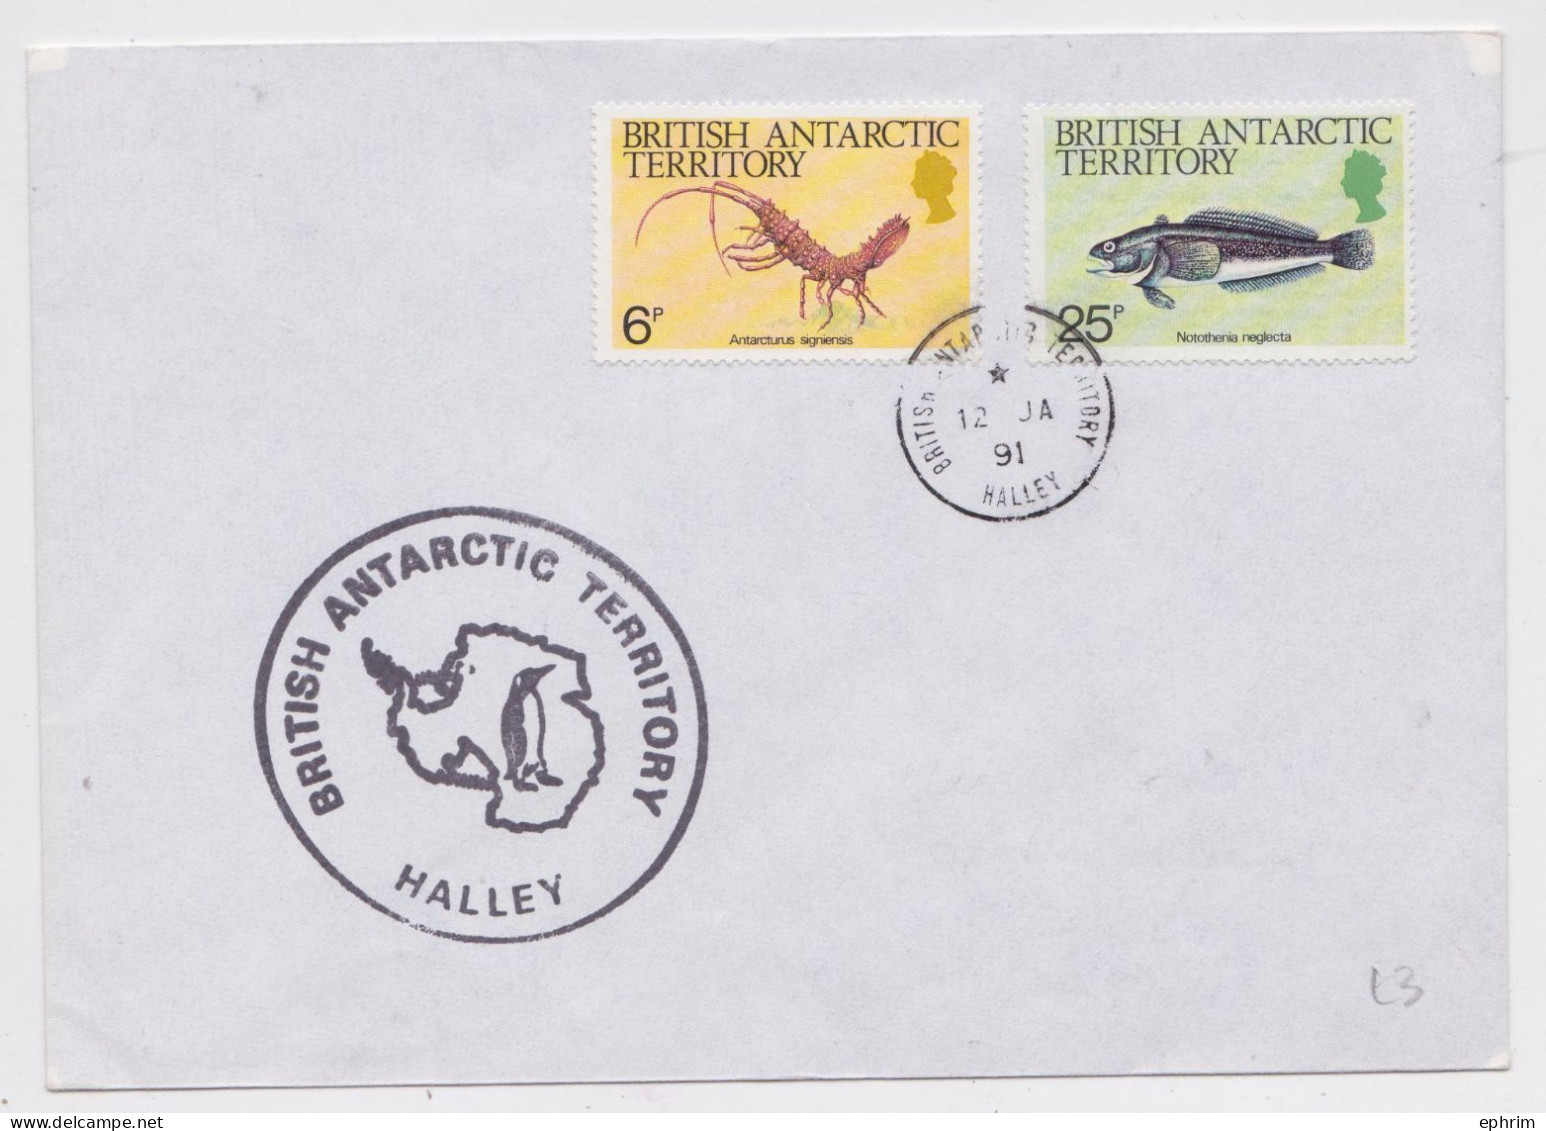 Antarctique BAT Britsh Antarctic Territory Base Halley Marine Life Stamp Cover 1991 Enveloppe Timbre Poisson Crustacé - Briefe U. Dokumente